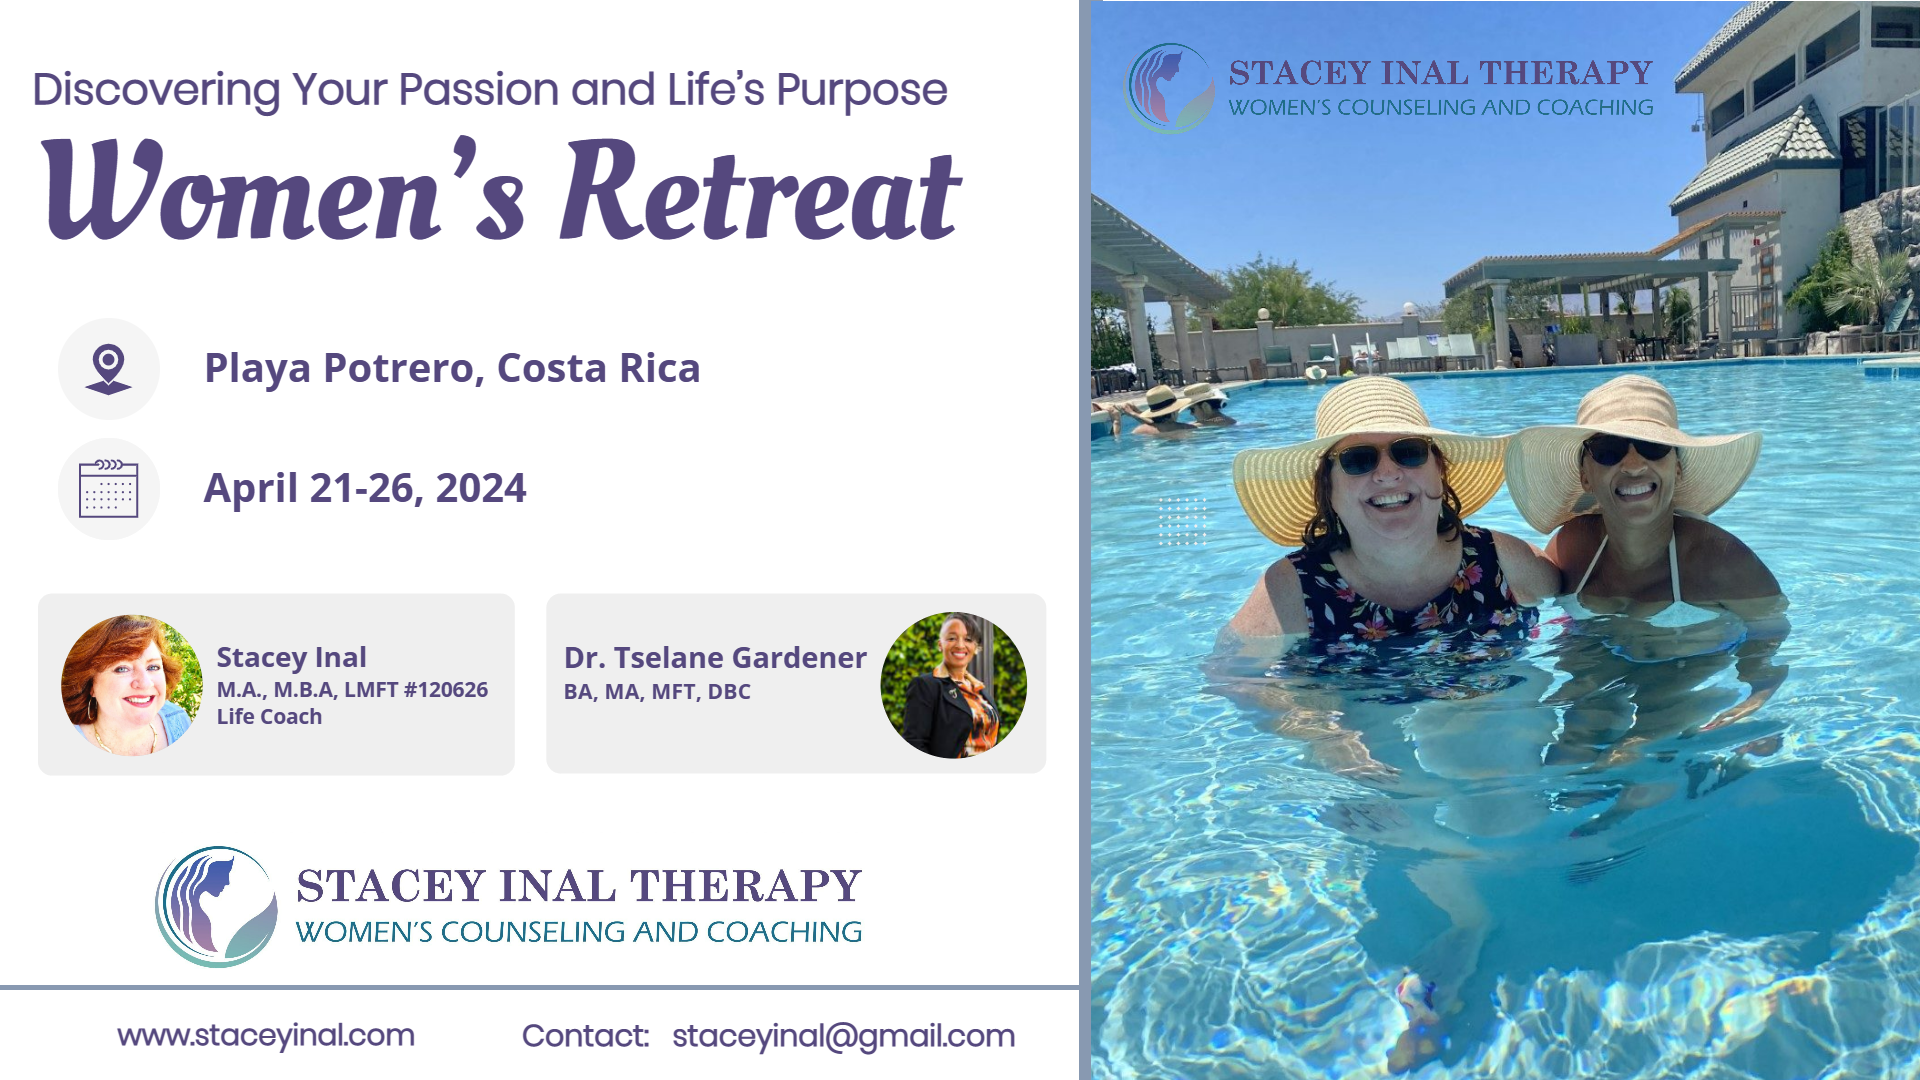 Women's Retreat in April 21-26, 2024 at Playa Potrero, Costa Rica